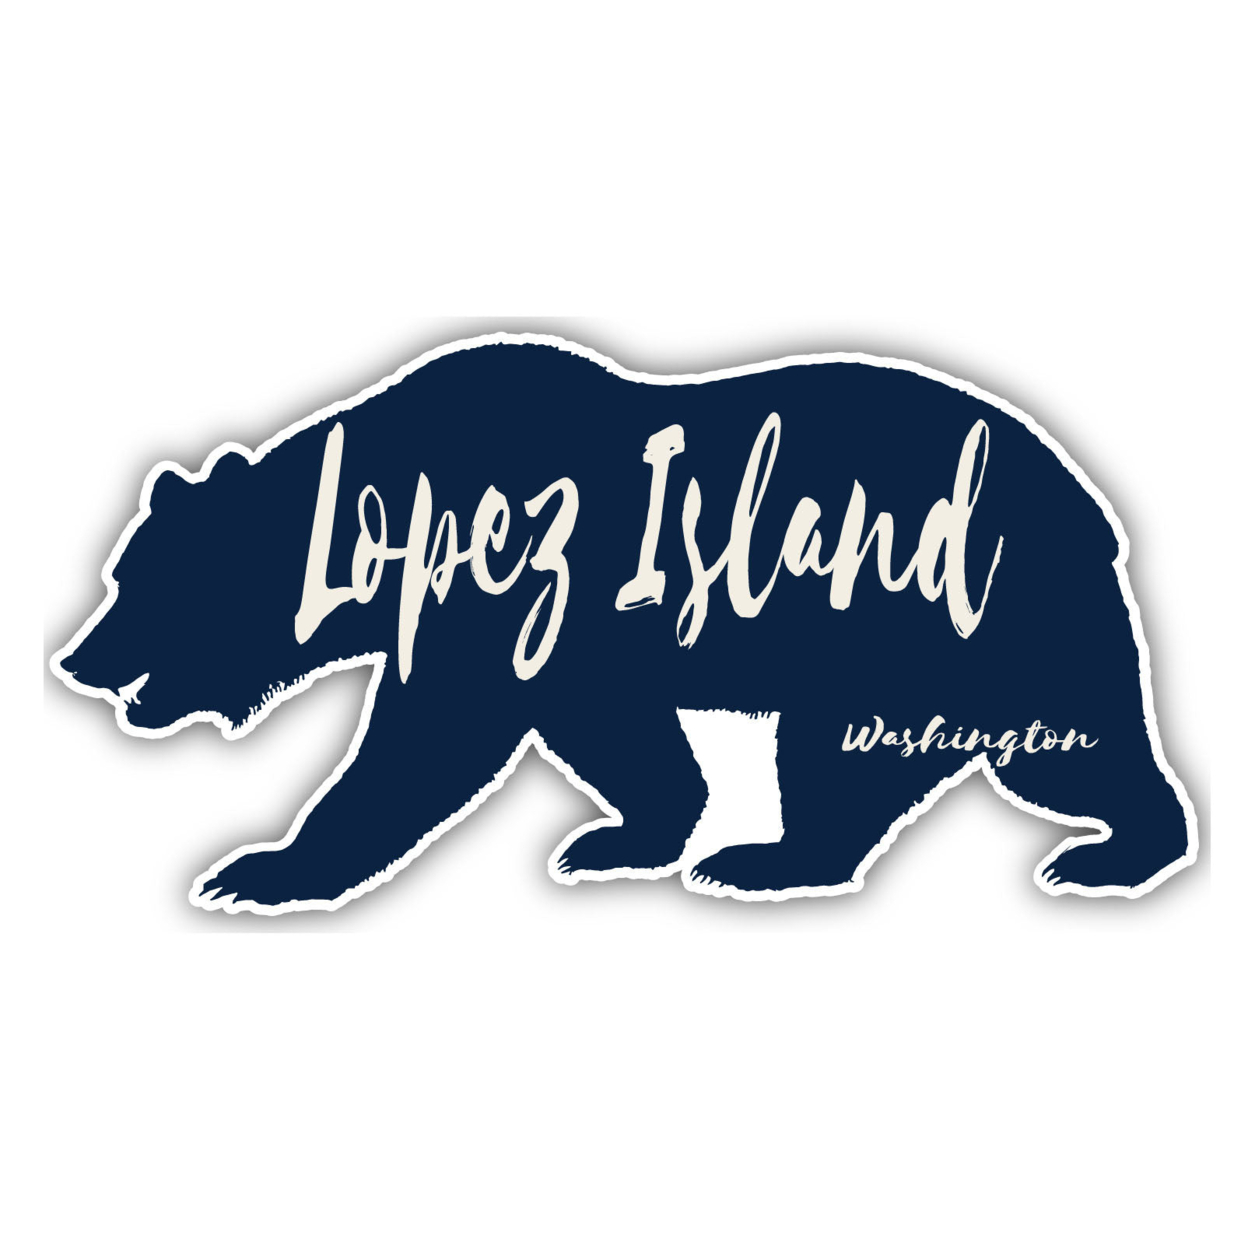 Lopez Island Washington Souvenir Decorative Stickers (Choose Theme And Size) - 4-Inch, Bear